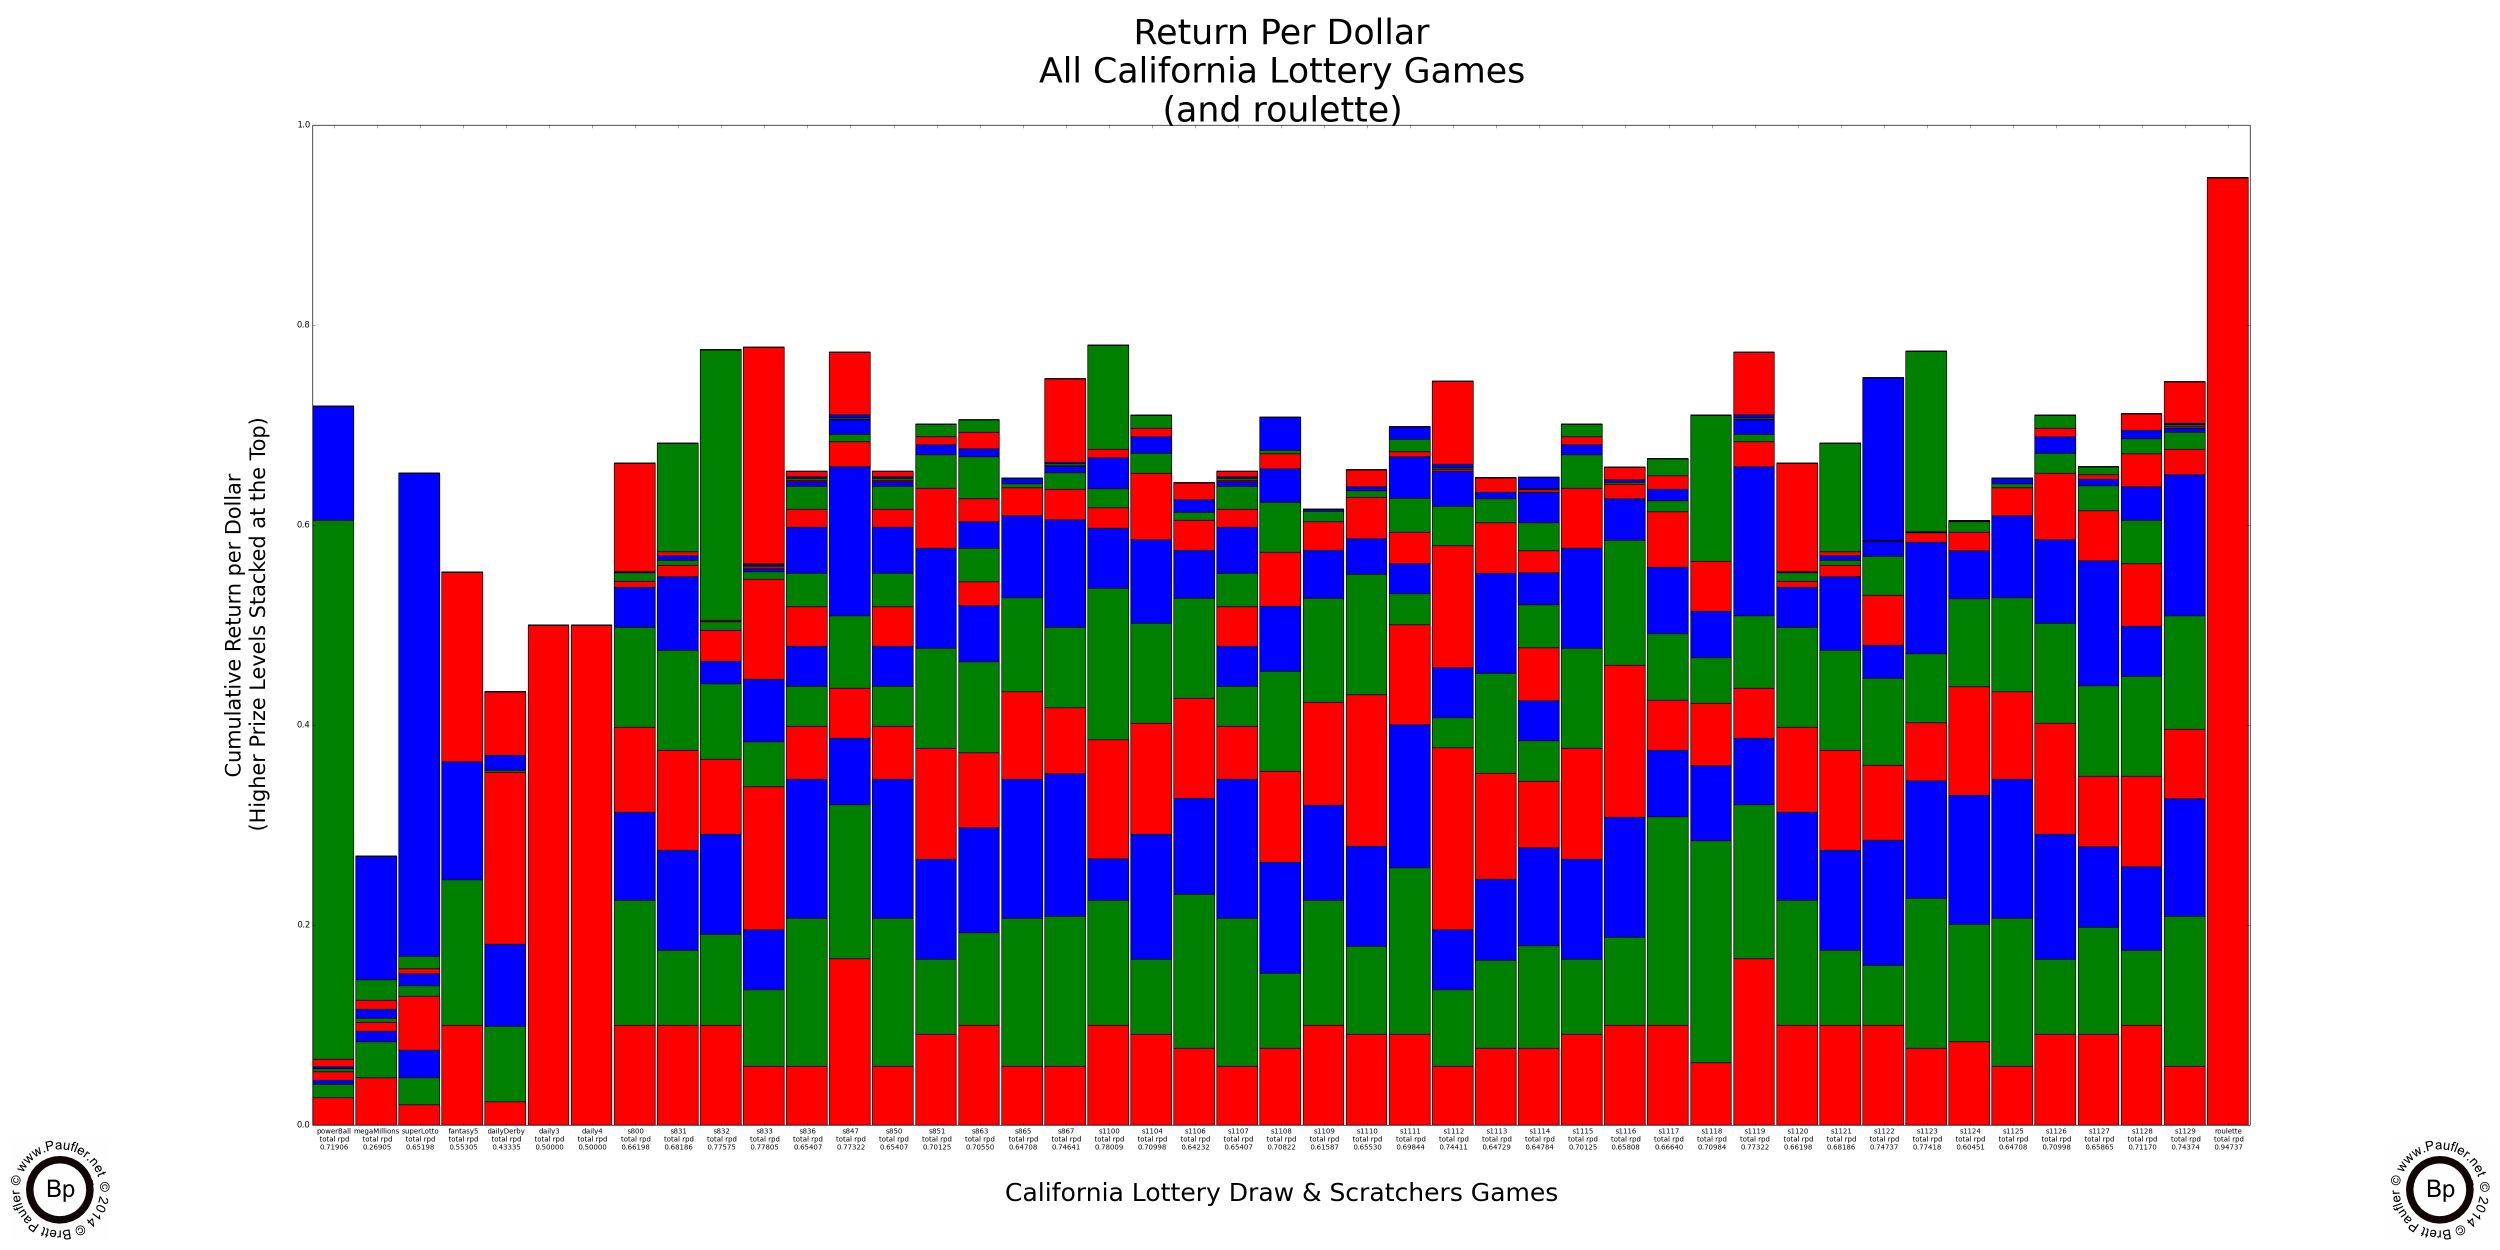 Return Per Dollar (1 - House Edge) For All California Lottery Games